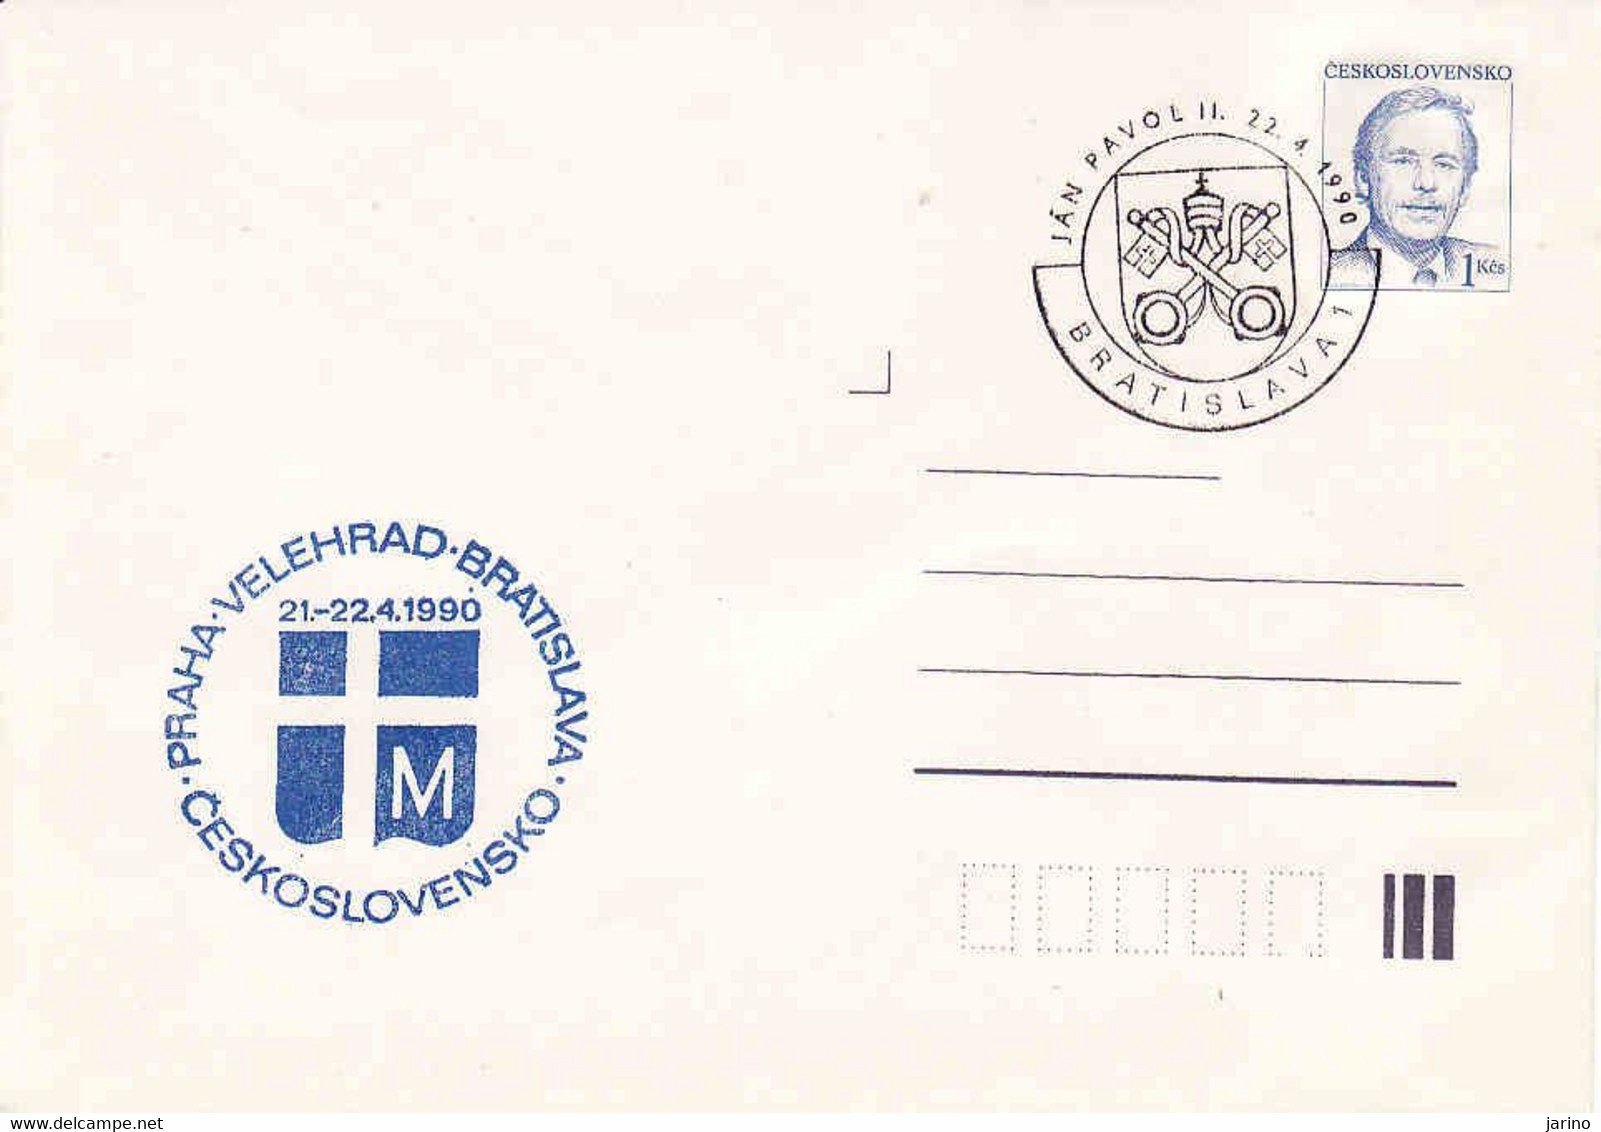 Czechoslovakia 1990, Praha - Velehrad, Bratislava, Visit John Pavul II 21. - 22.4 .1990 - Buste